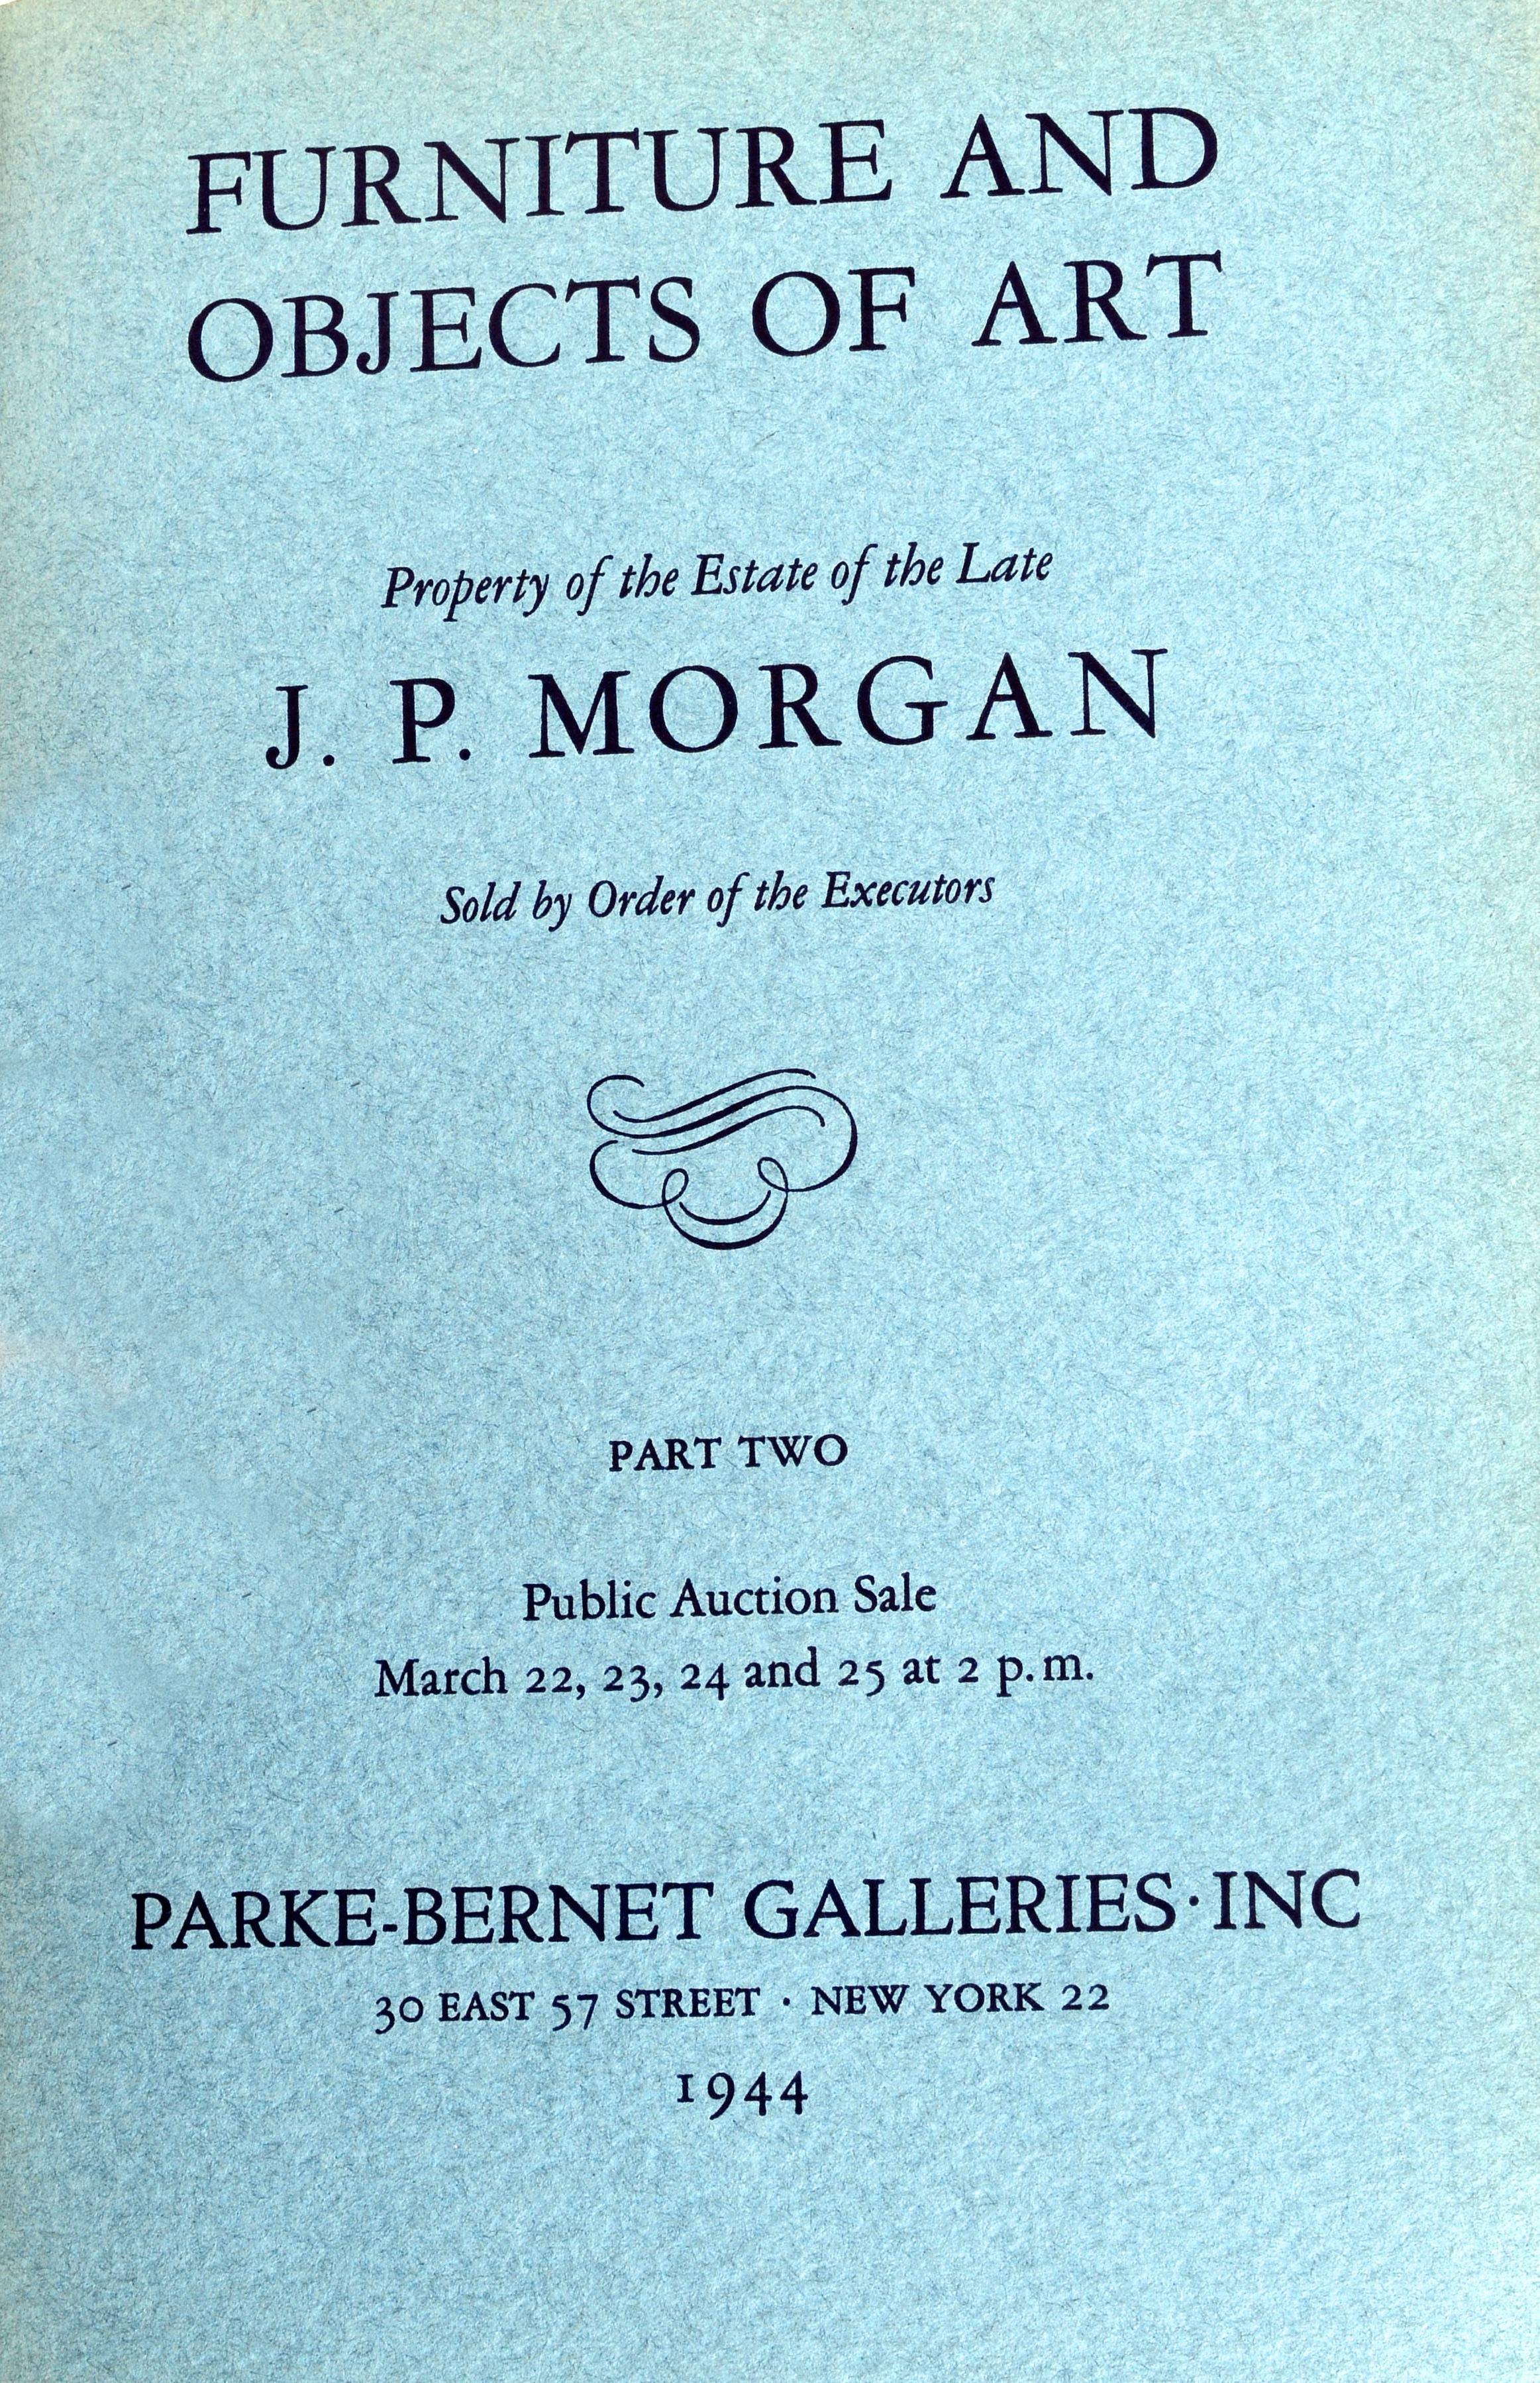 Propriétaire La succession de la fin de J.P. Morgan, ensemble complet de catalogues de 1944 Bon état à valatie, NY